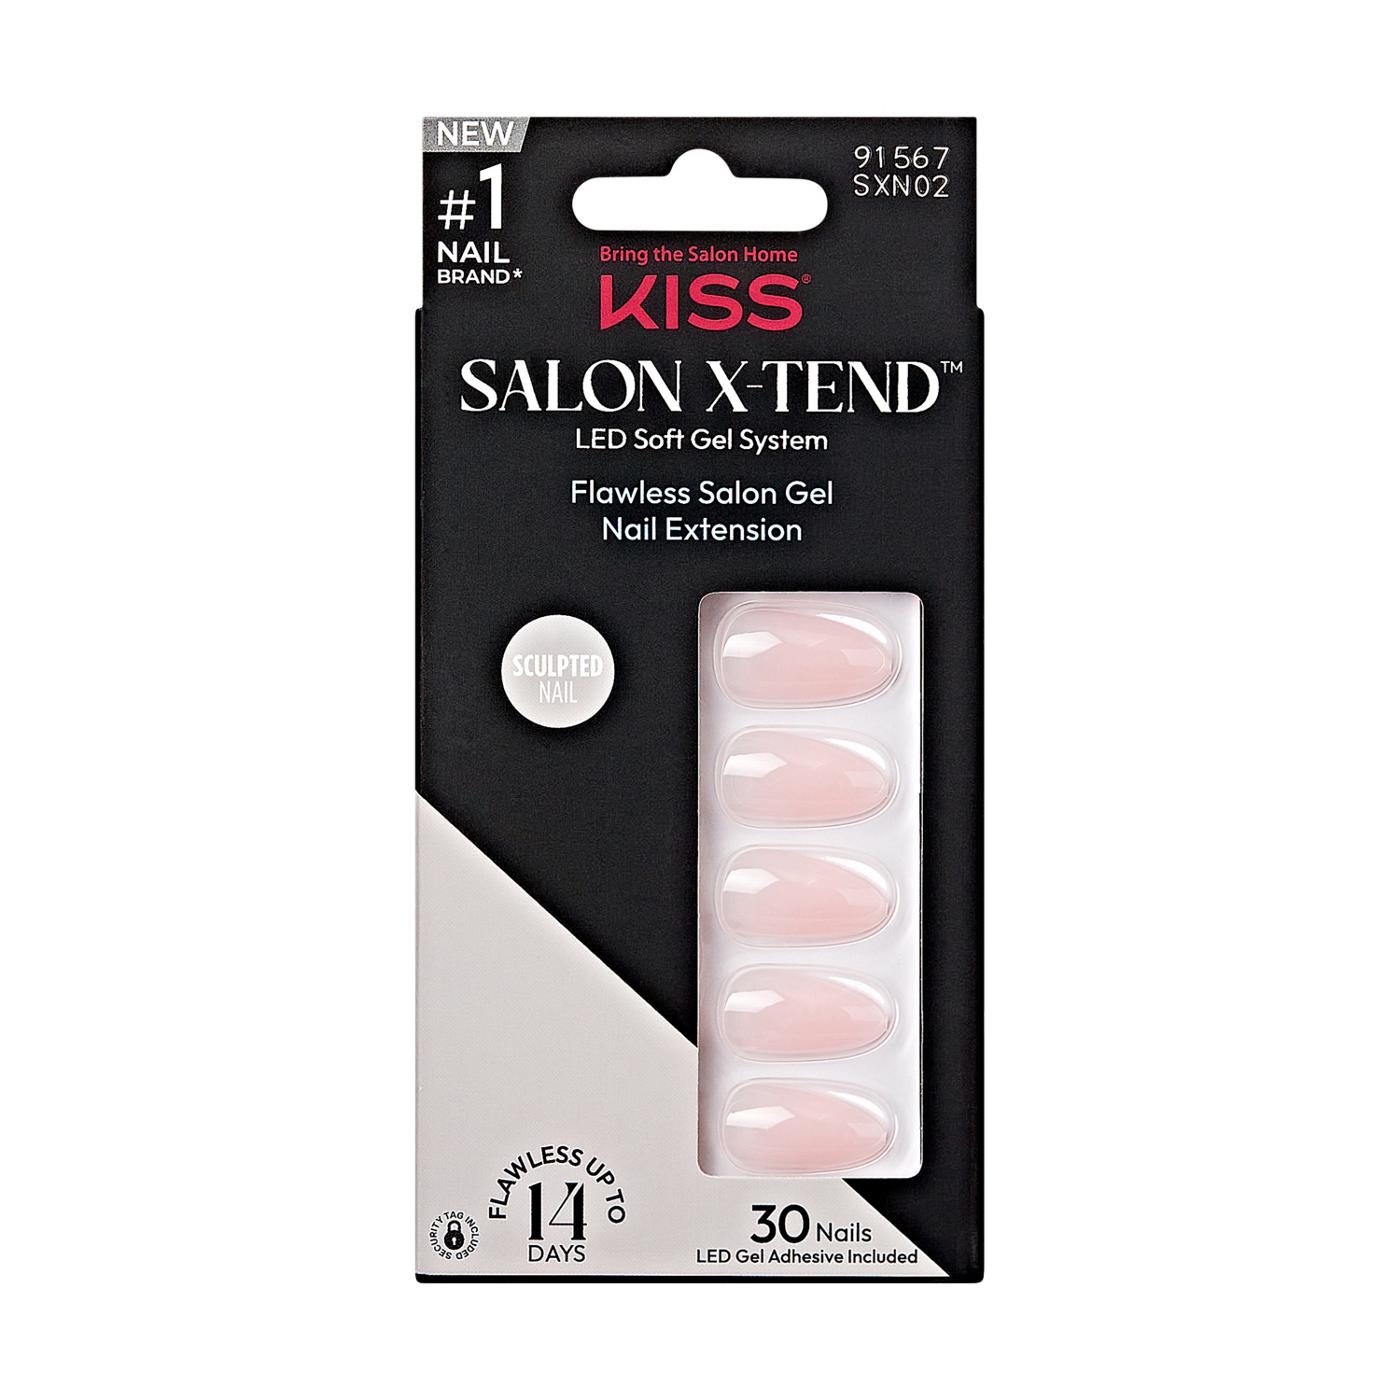 KISS Salon X-Tend LED Soft Gel System - Gloria; image 1 of 7